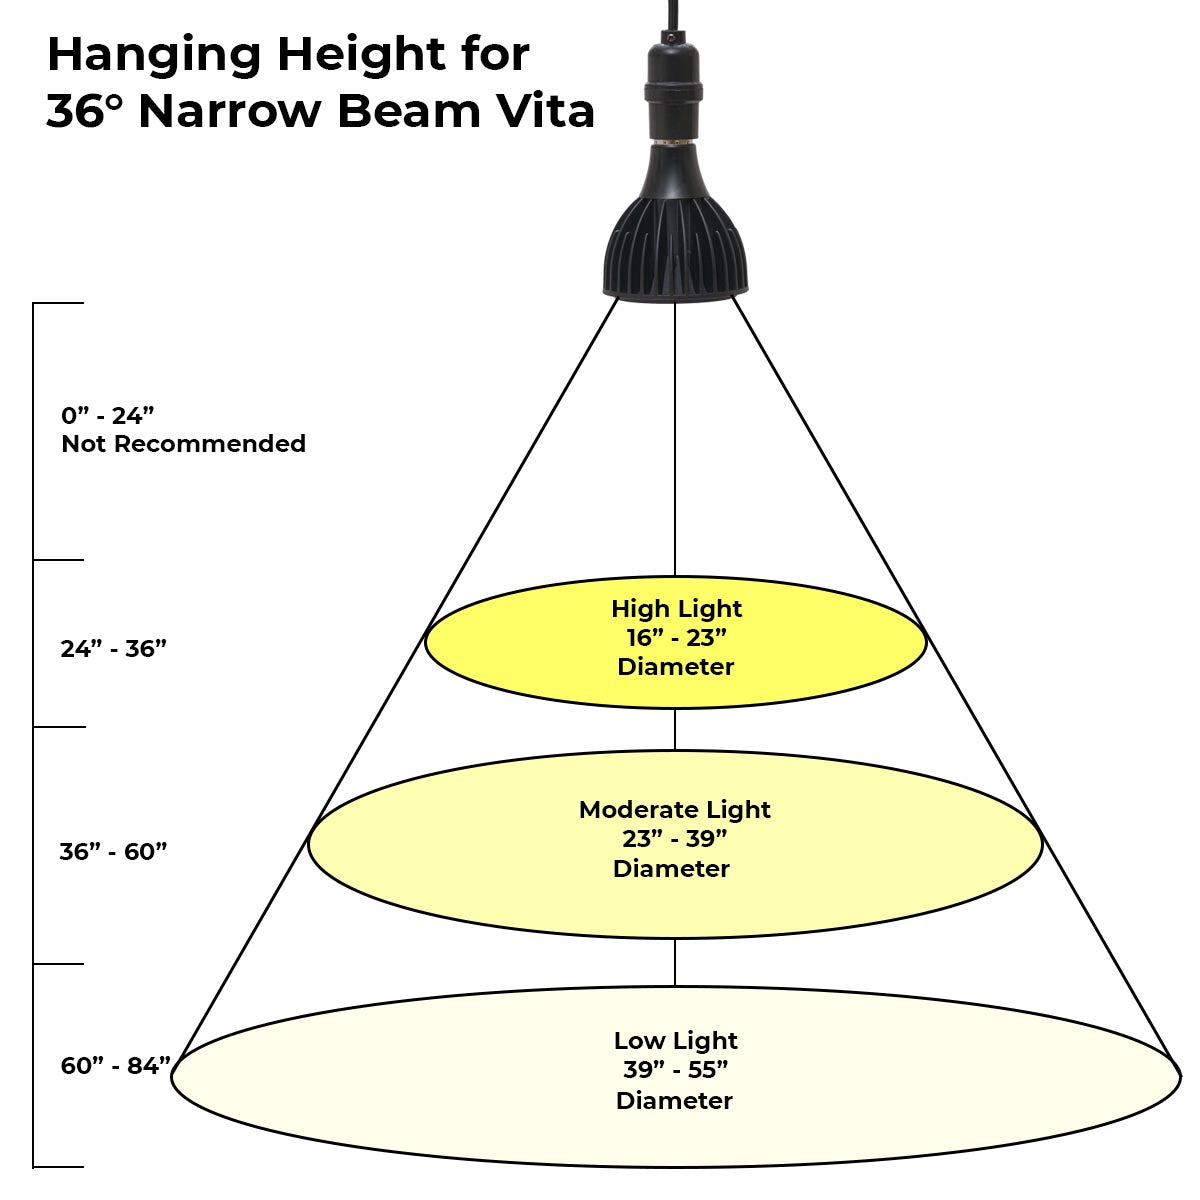 36 degree Vita grow bulb hanging height